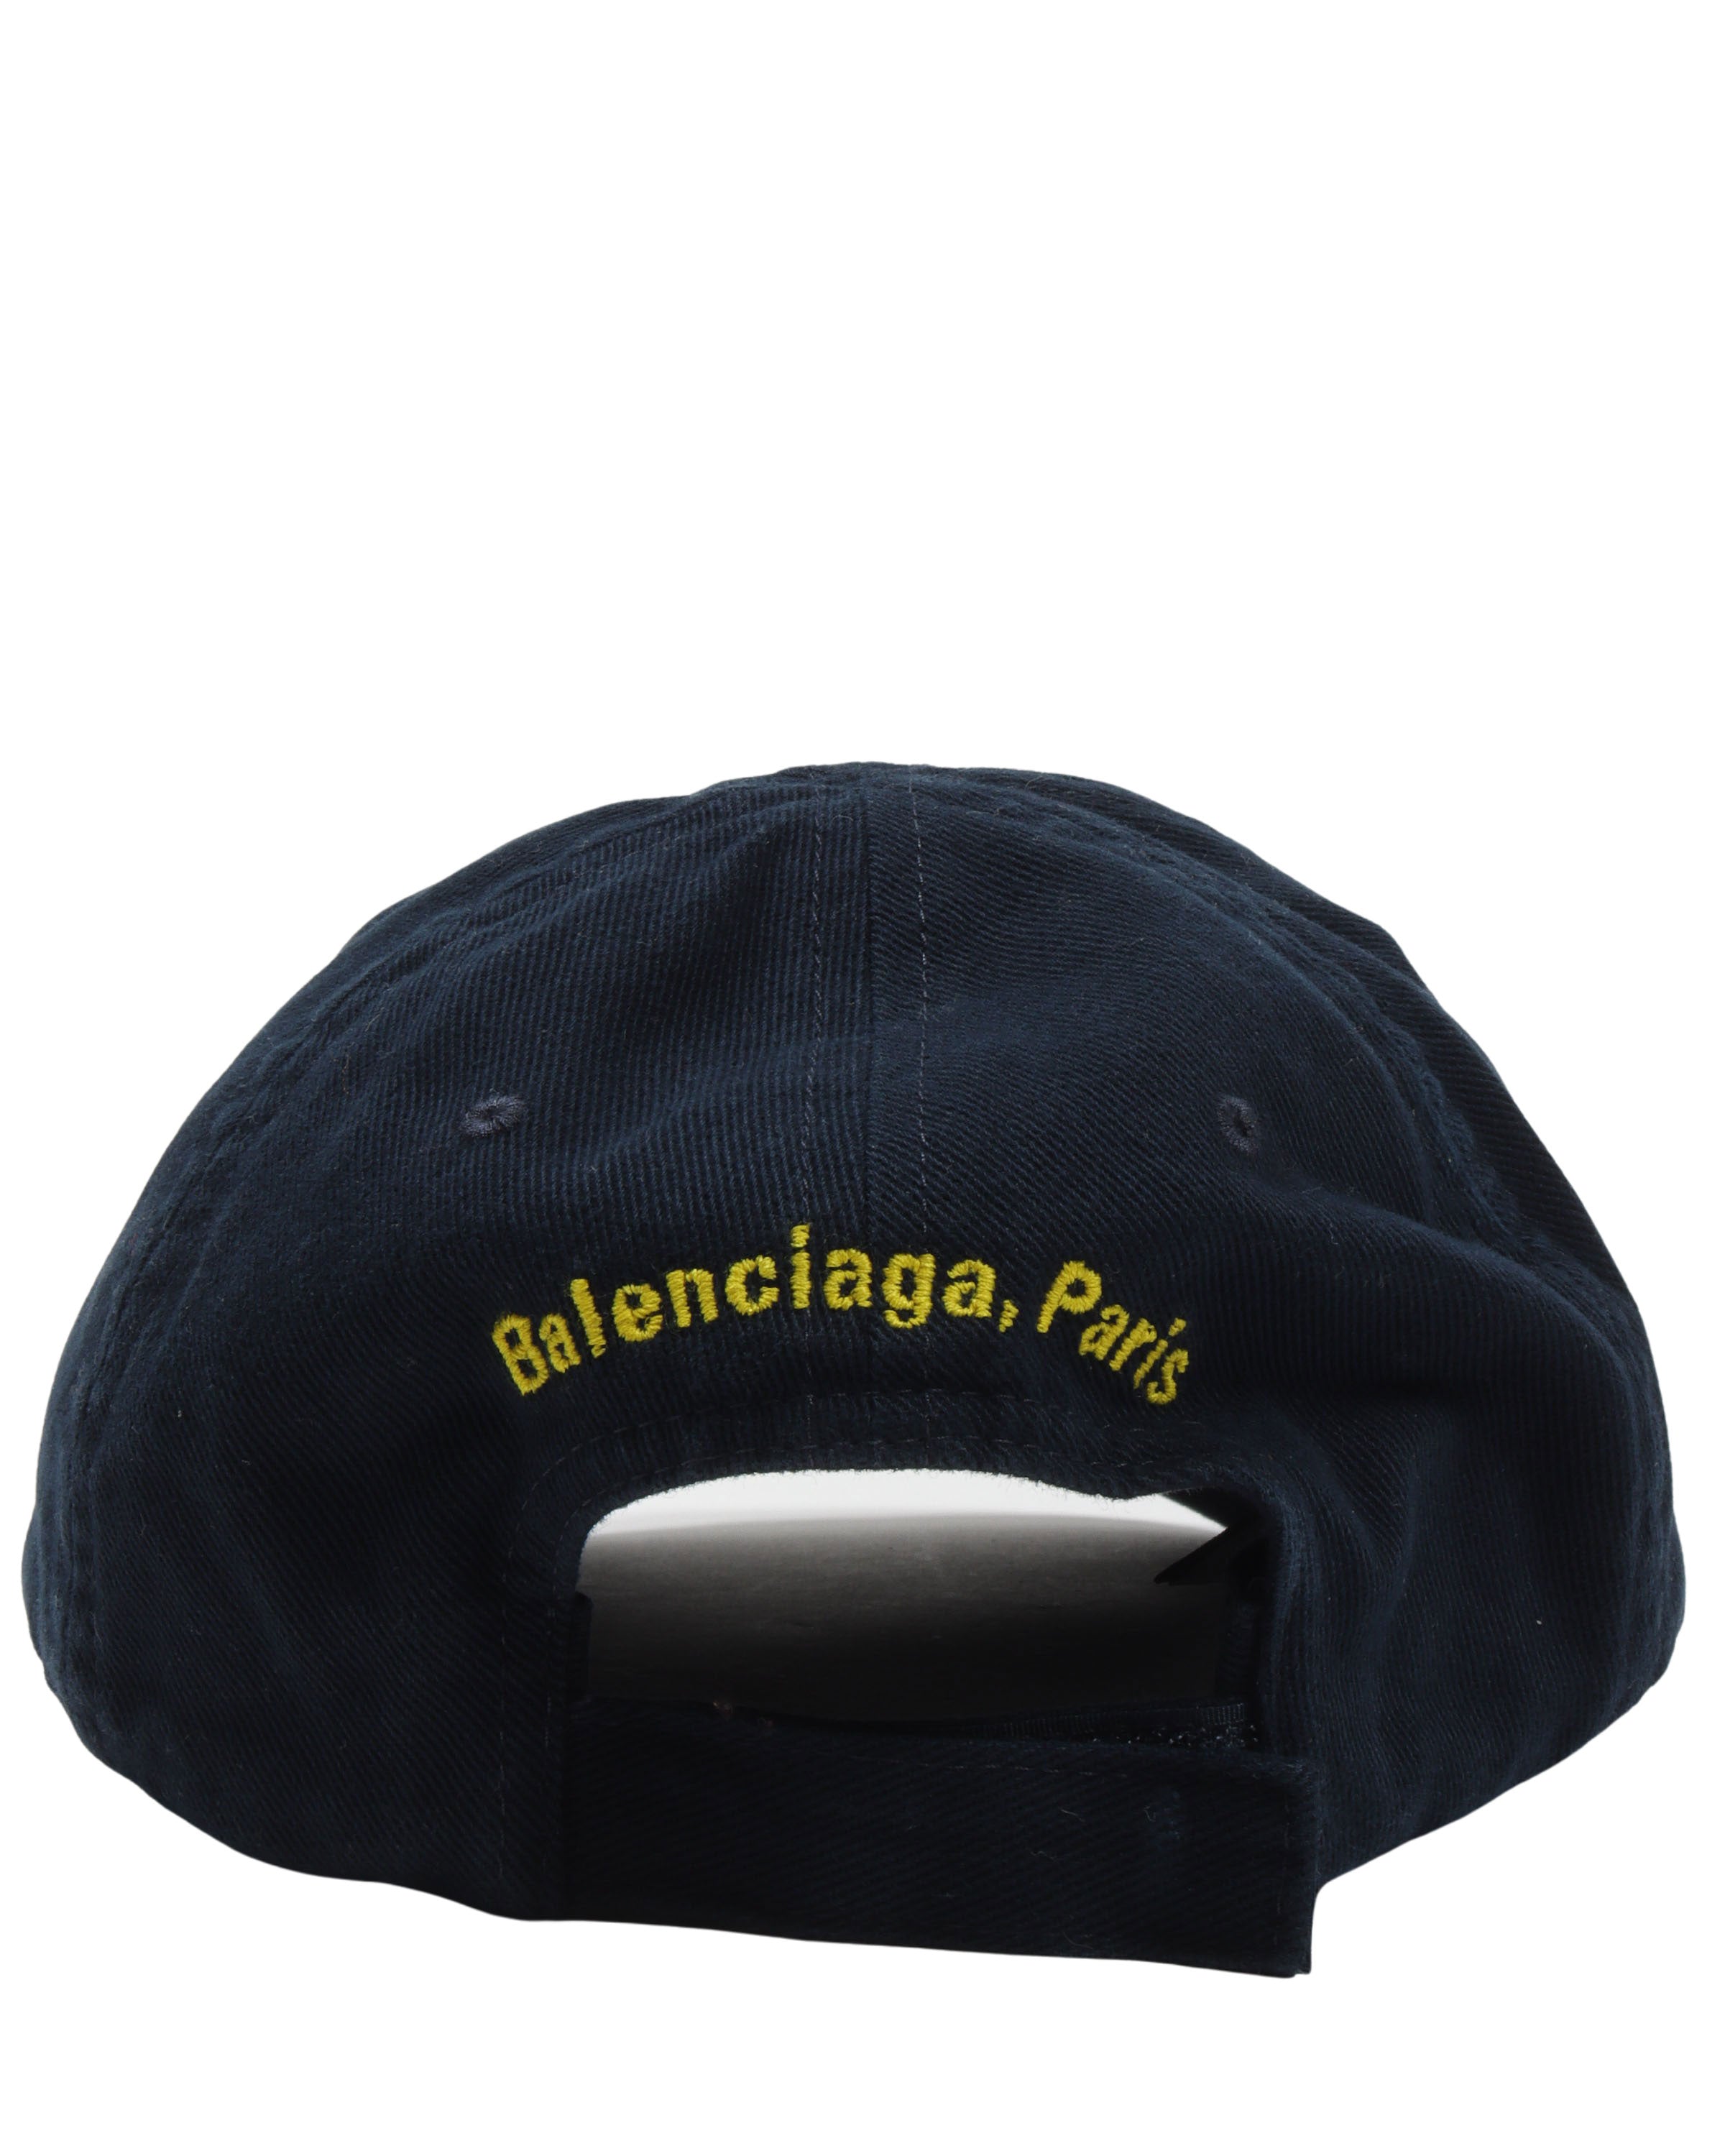 FBI Logo Hat